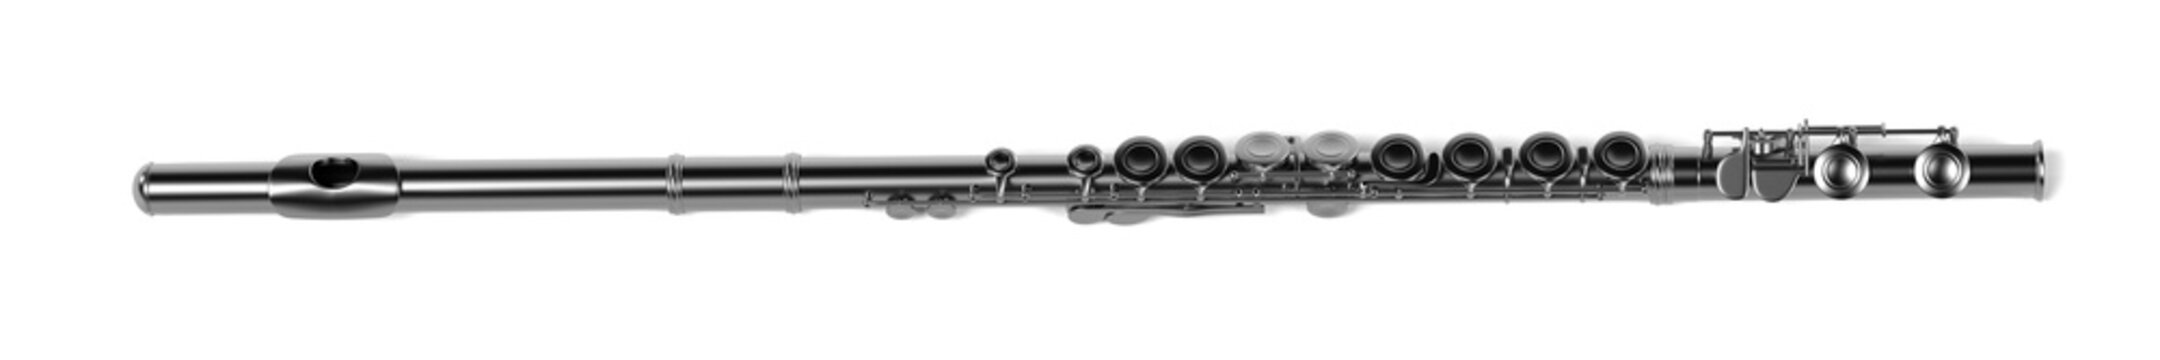 3d Renderings Of Flute (musical Instrument)